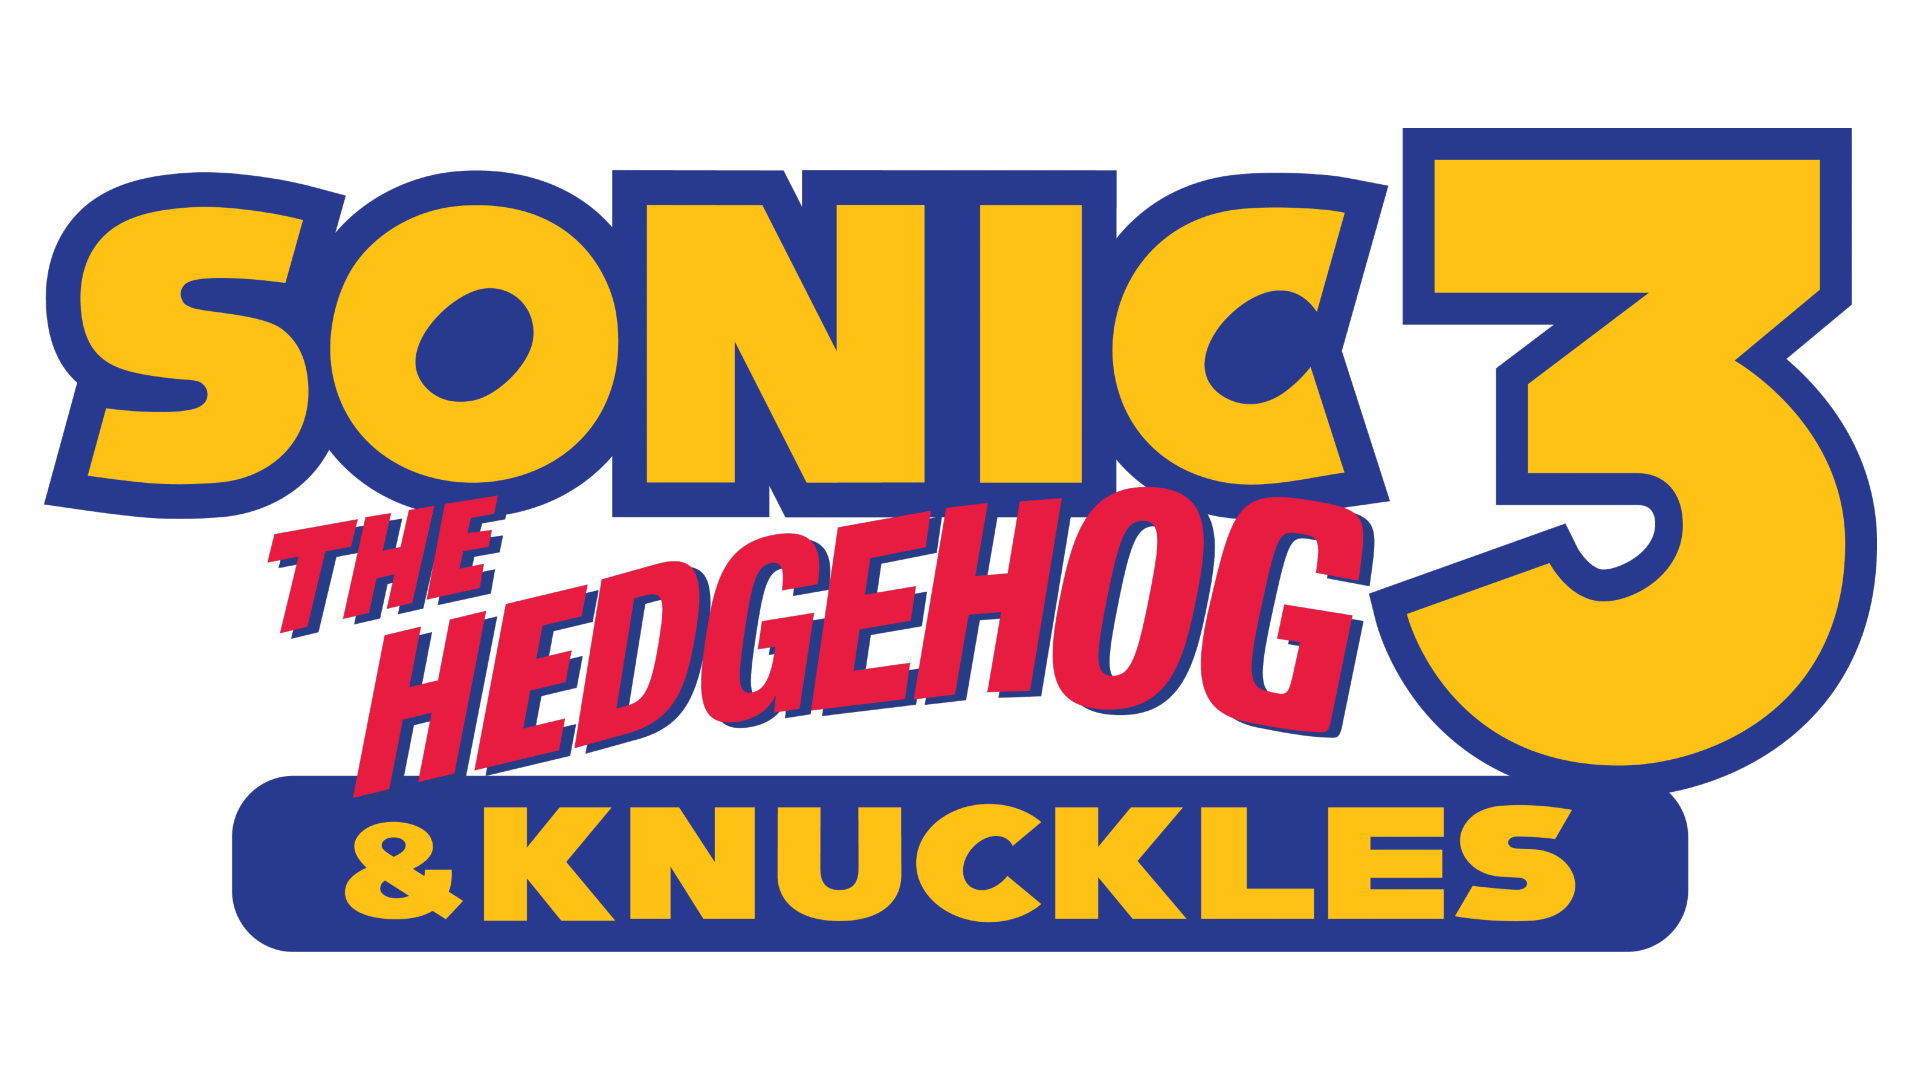 Sonic the Hedgehog 3 (& Knuckles) Logo